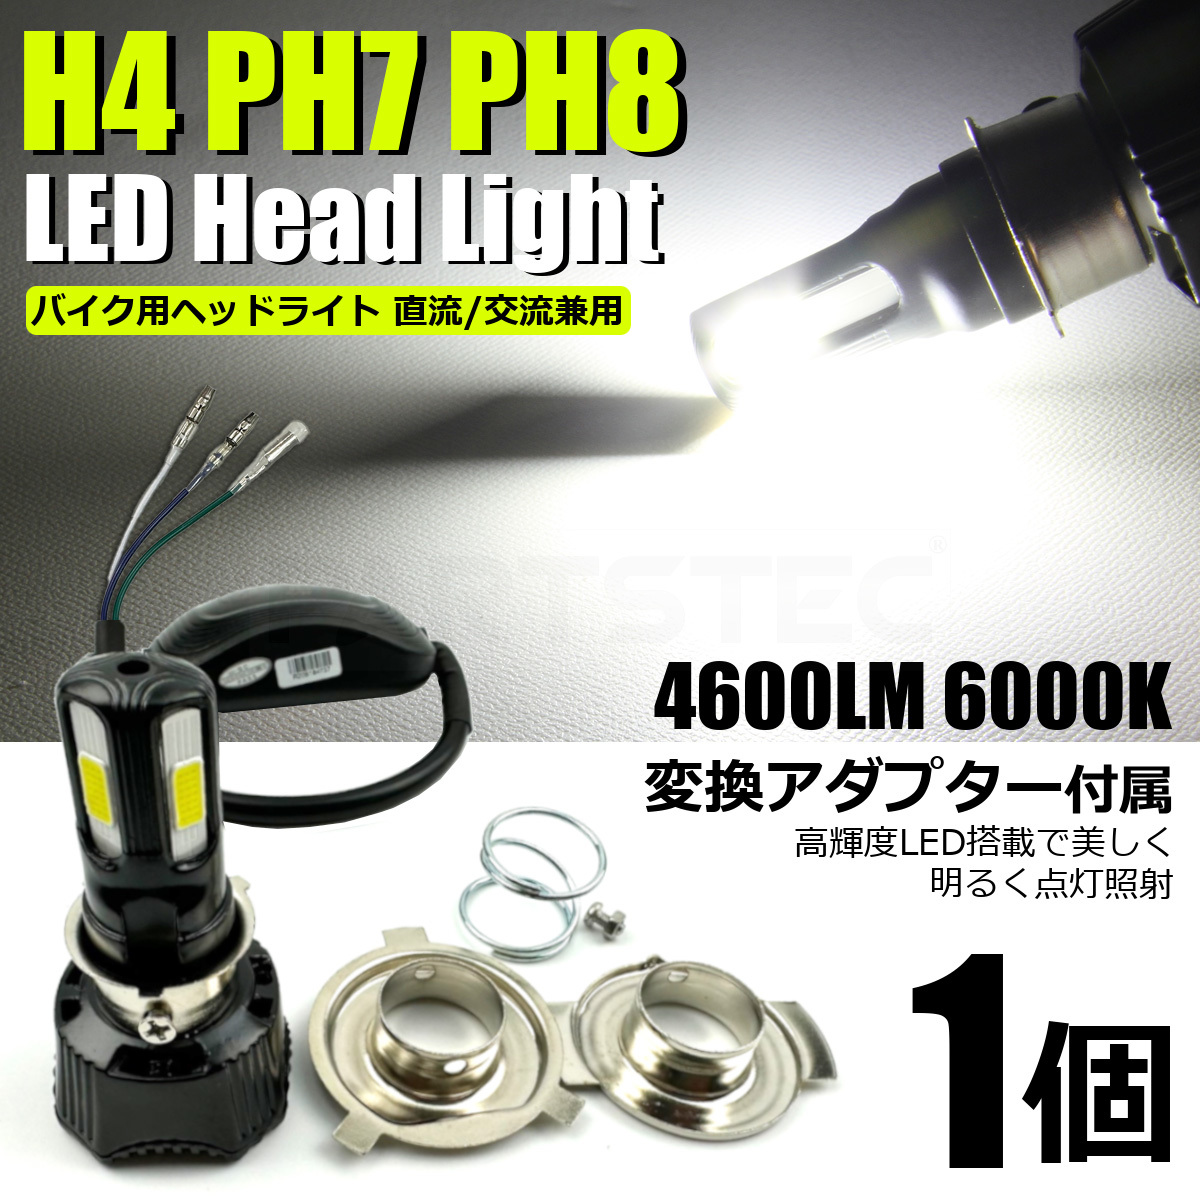  Gyro Canopy PH7 LED head light lamp valve(bulb) 42W fan attaching white bike / 134-96 C-2